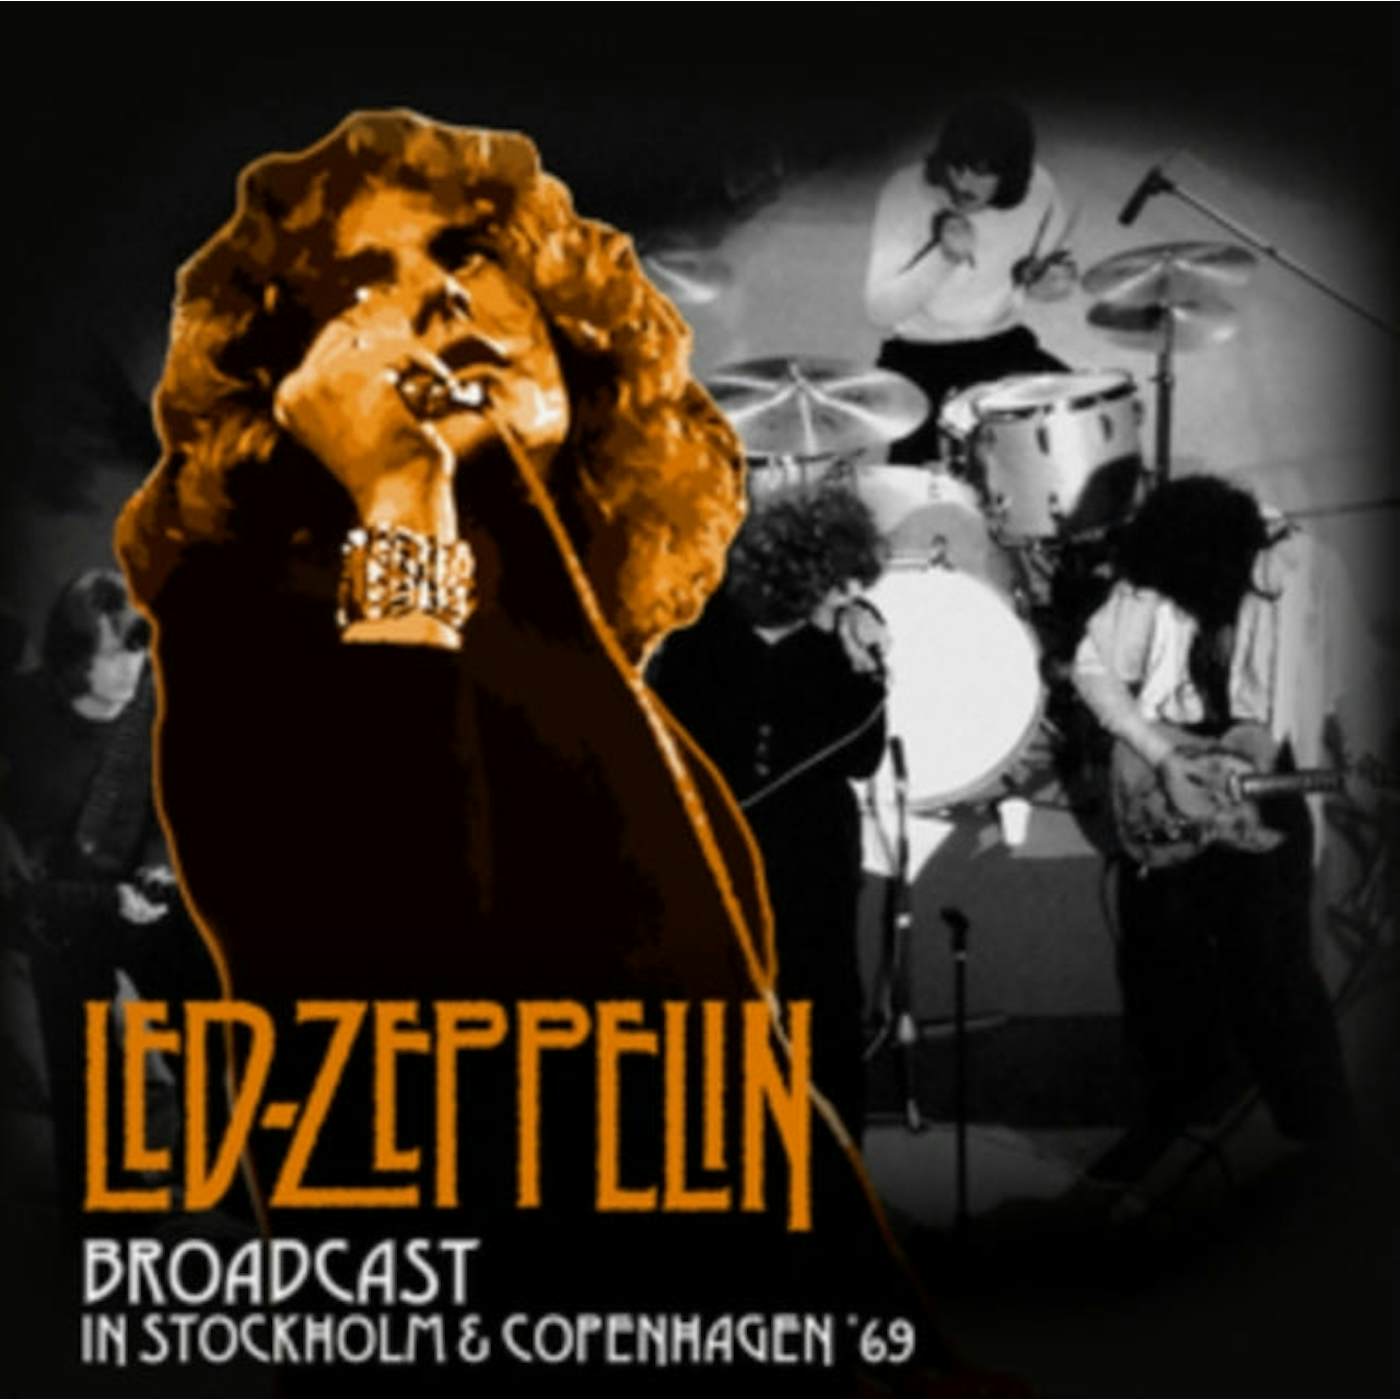 Led Zeppelin LP Vinyl Record - Broadcast In Stockholm And Copenhagen